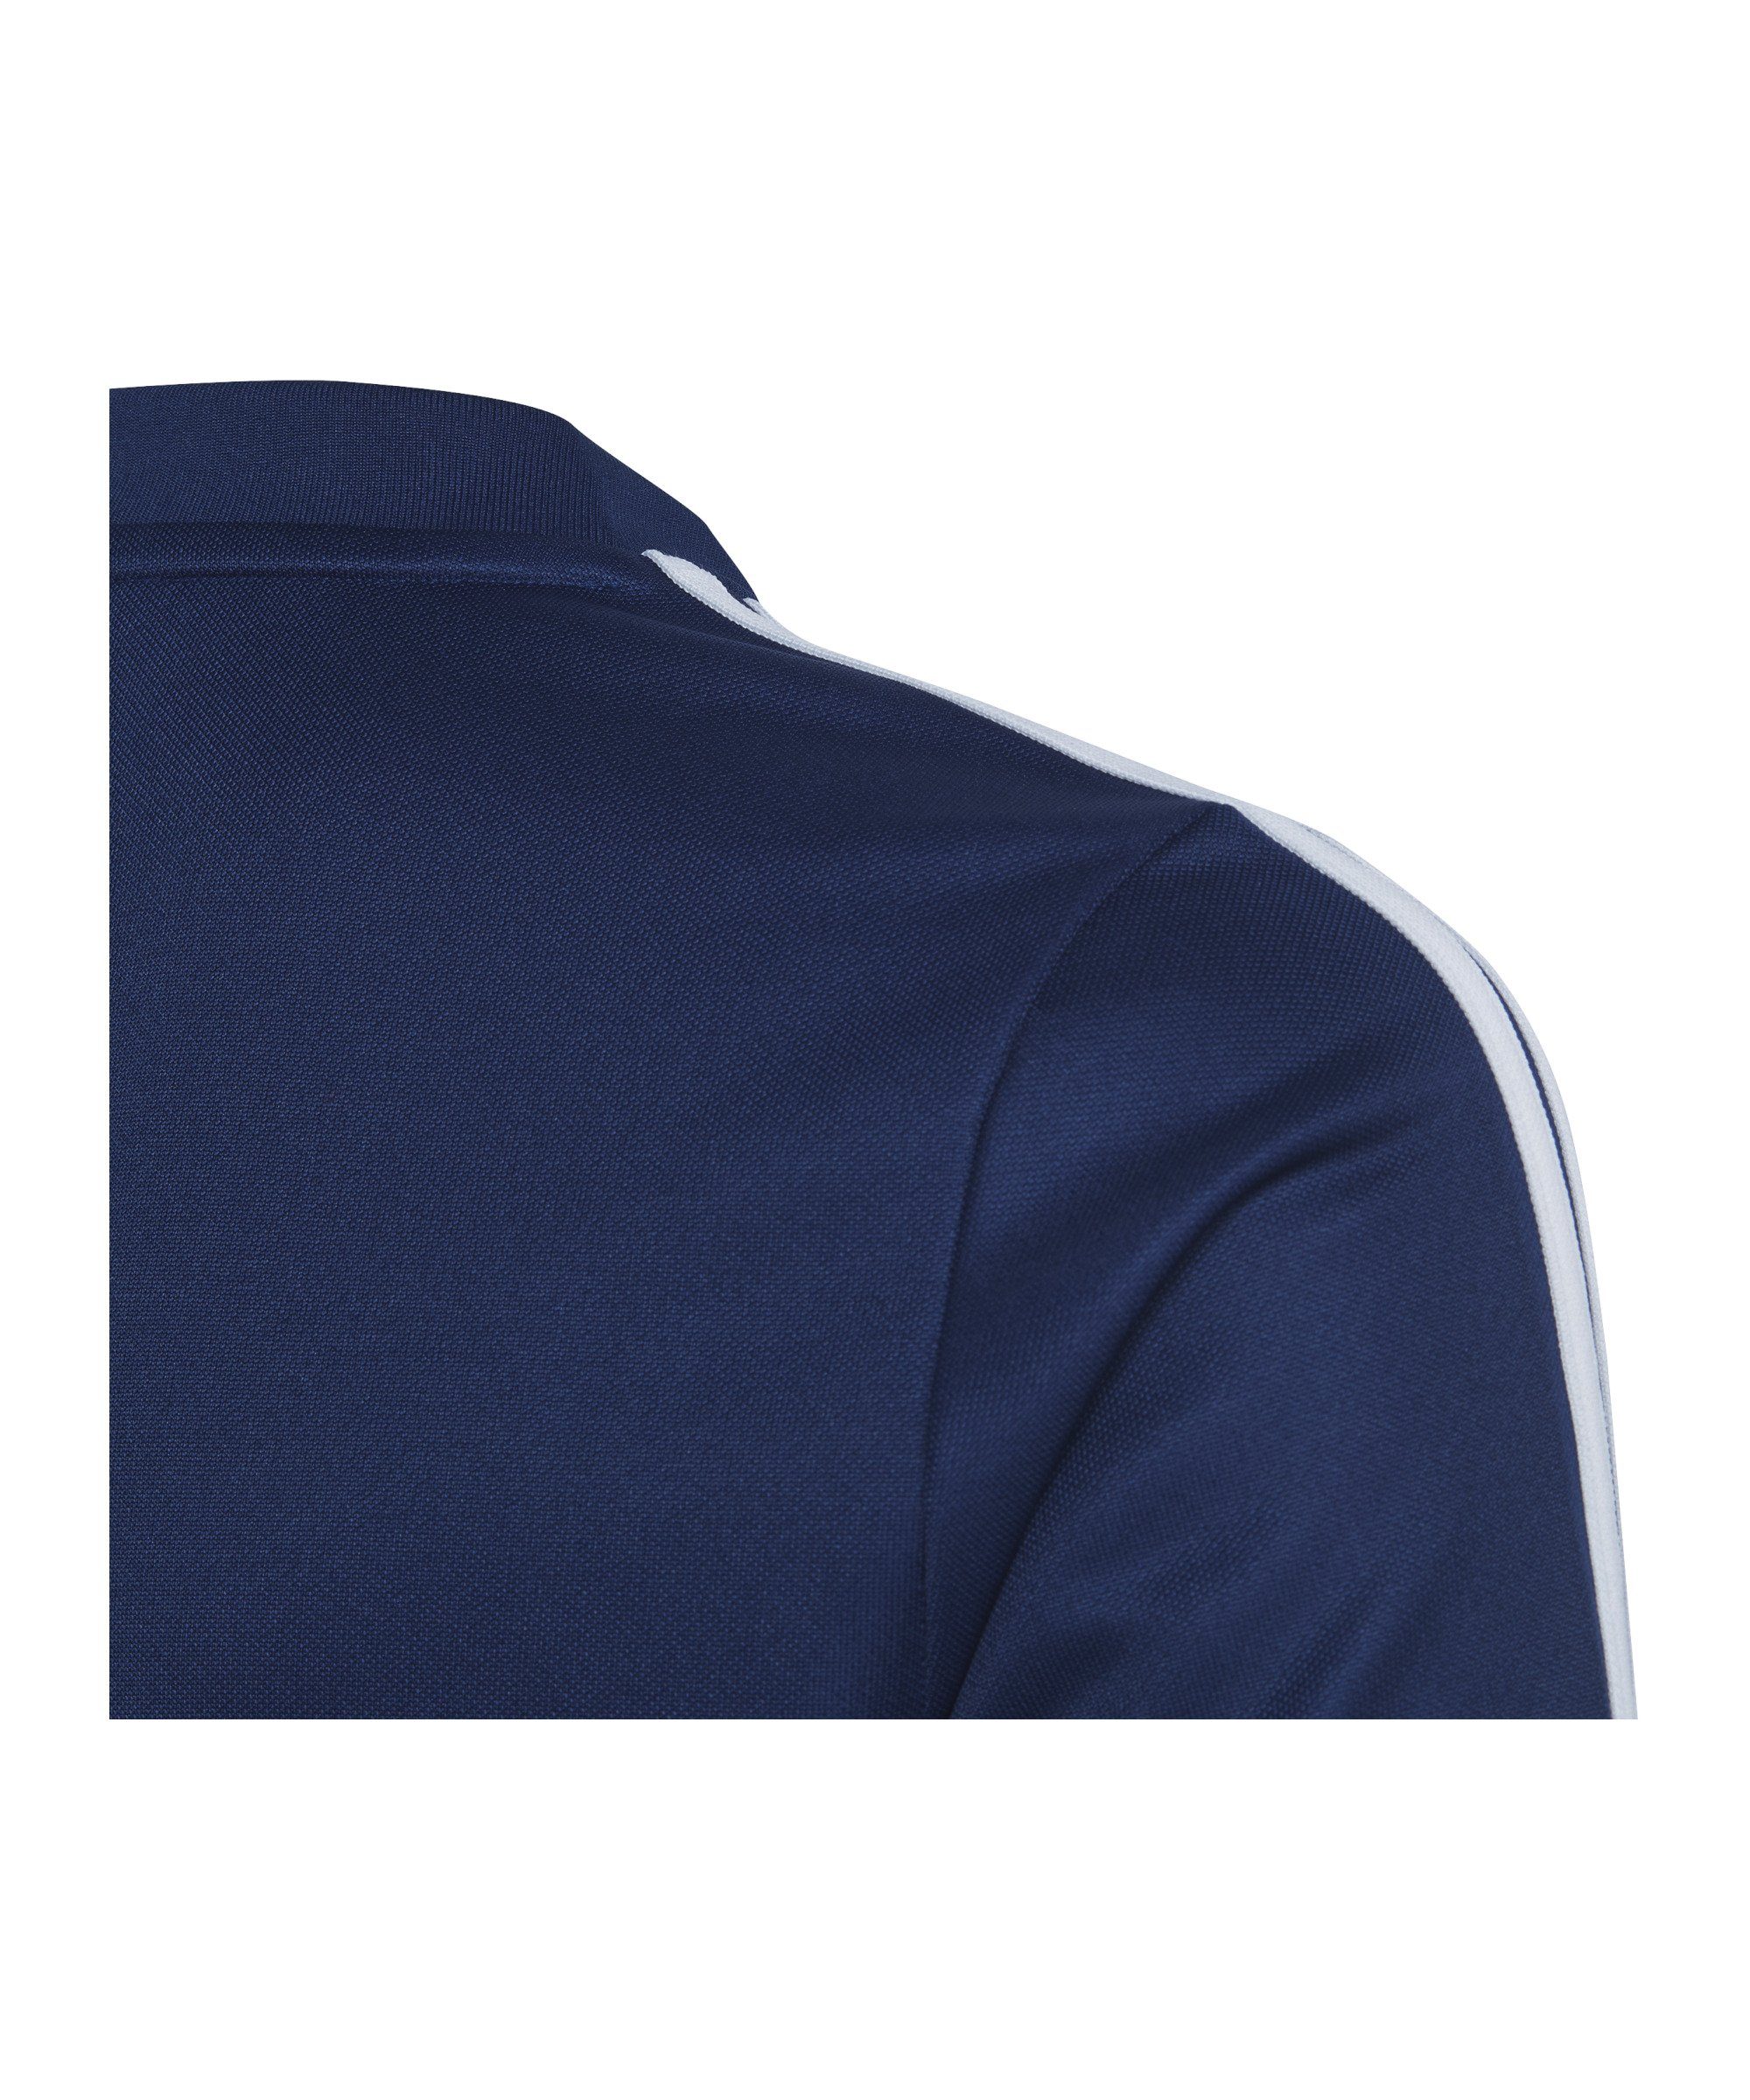 adidas Performance Kids 23 Club Sweatshirt Tiro blauweiss Sweatshirt HalfZip